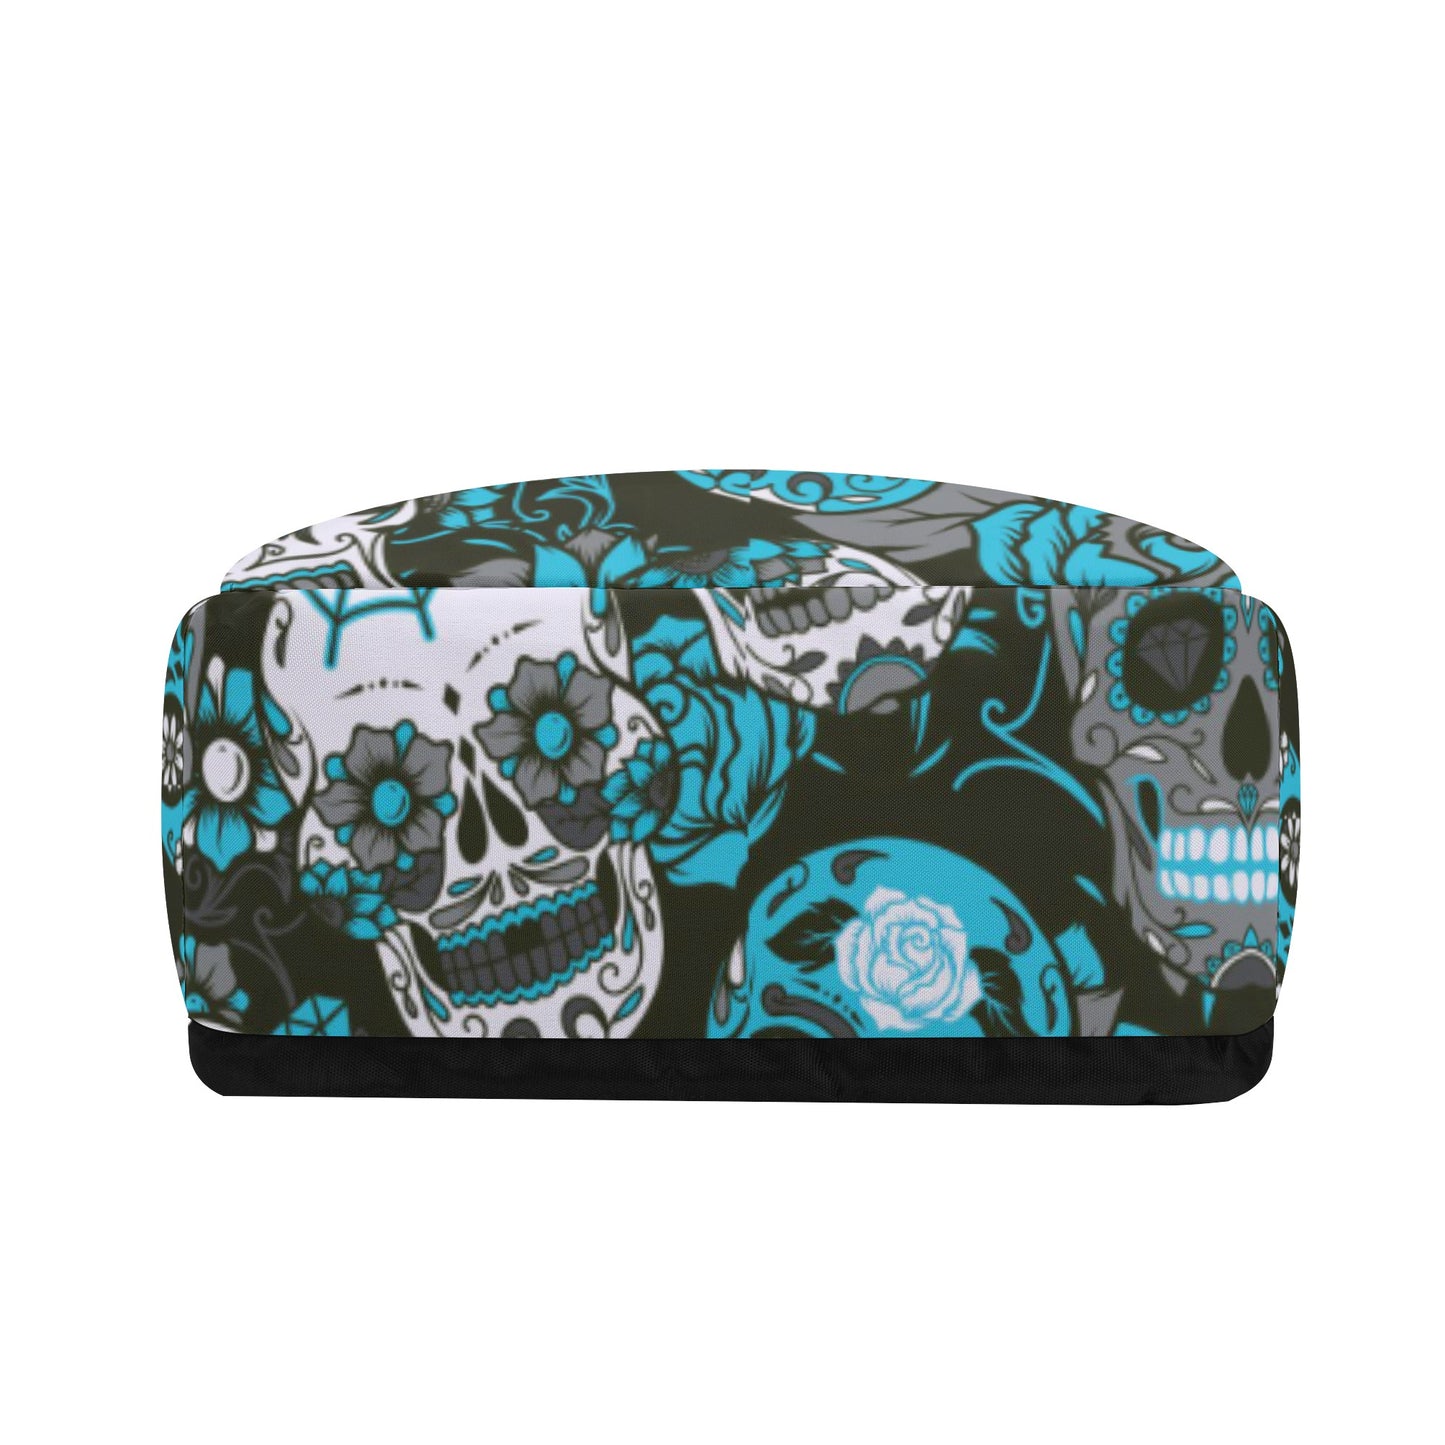 Sugar skull Dia de los muertos New Half Printing Laptop Backpack